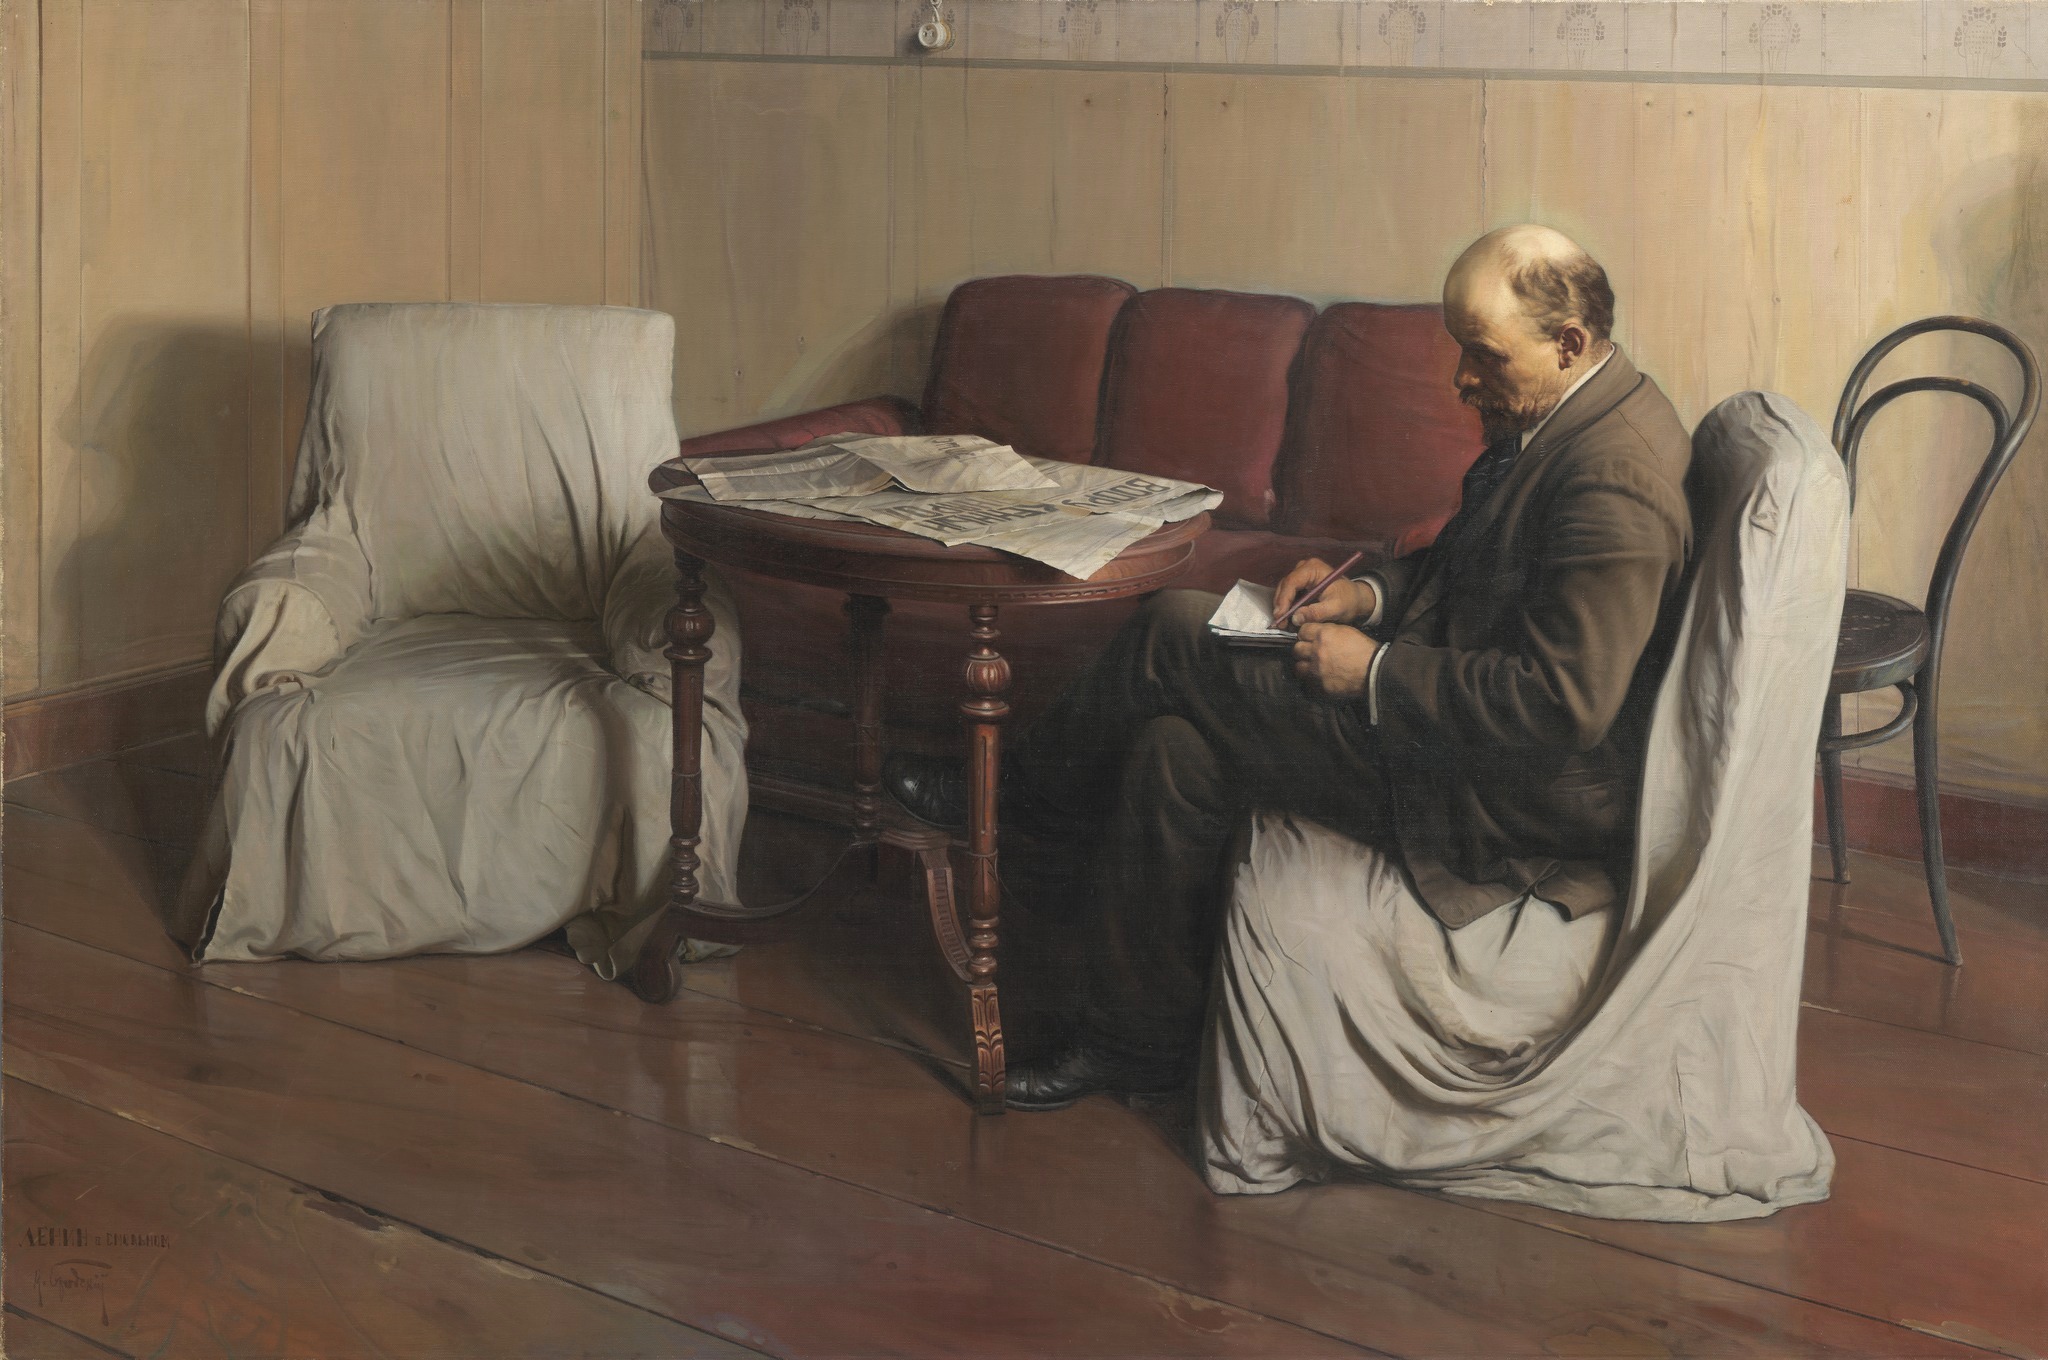 Isaak Brodsky, Vladimir Lenin in Smolny in 1917, 1930, oil on canvas, 190 x 287 cm, Tretyakov Gallery, Moscow